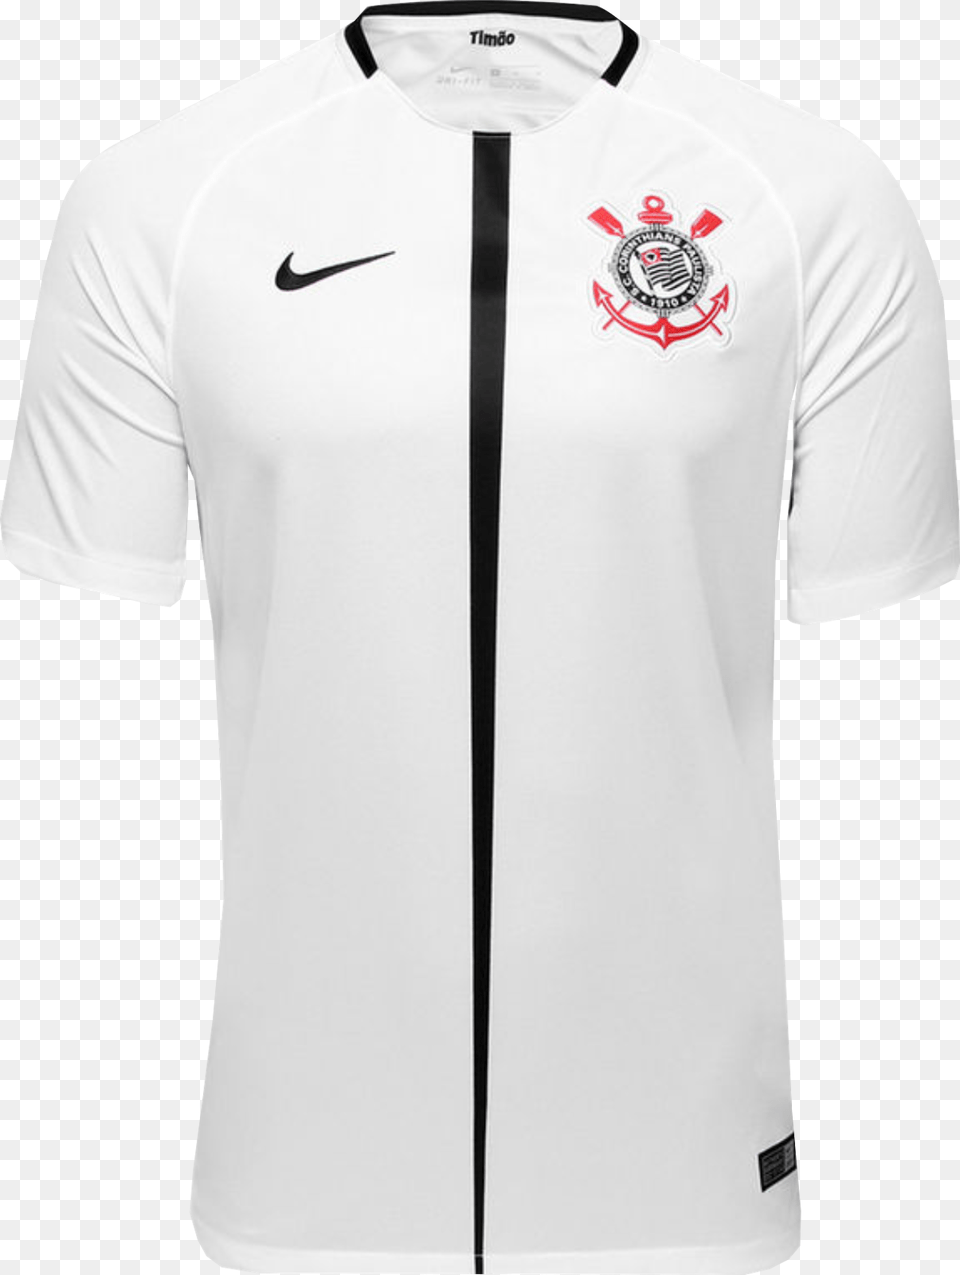 Corinthians Car Decals, Clothing, Shirt, T-shirt, Jersey Png